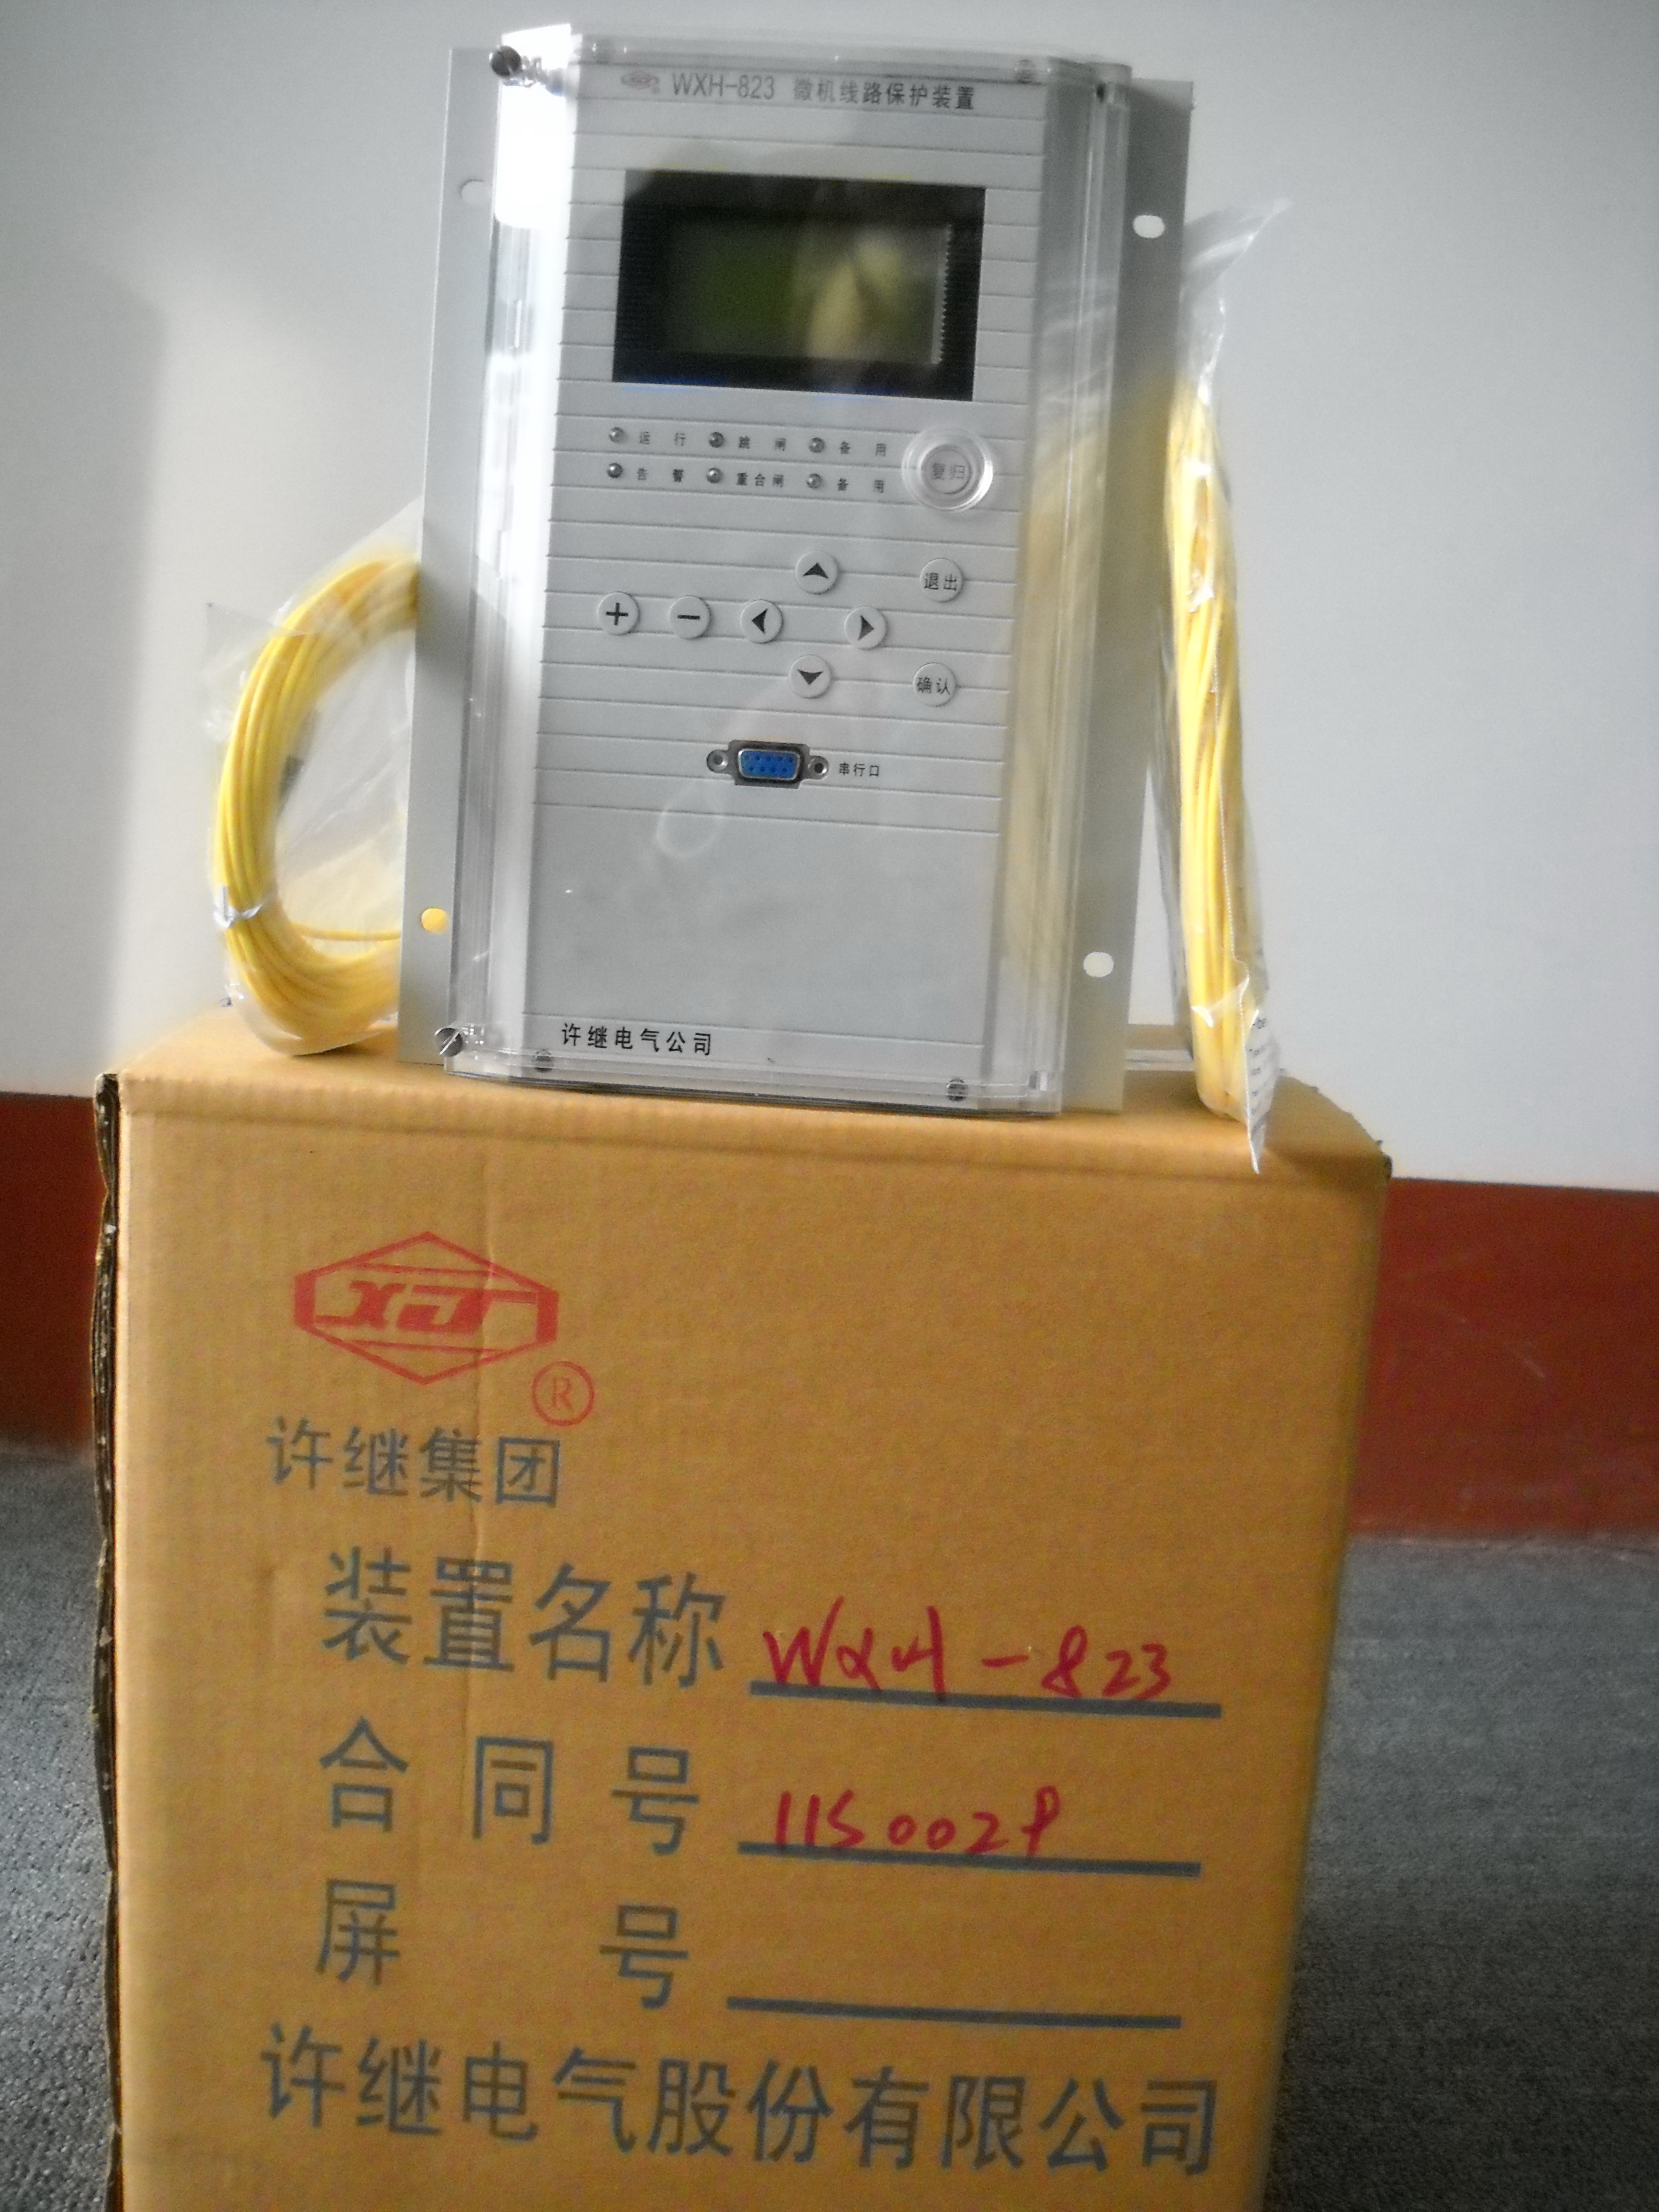 WXH-823微机线路保护测控装许继现货